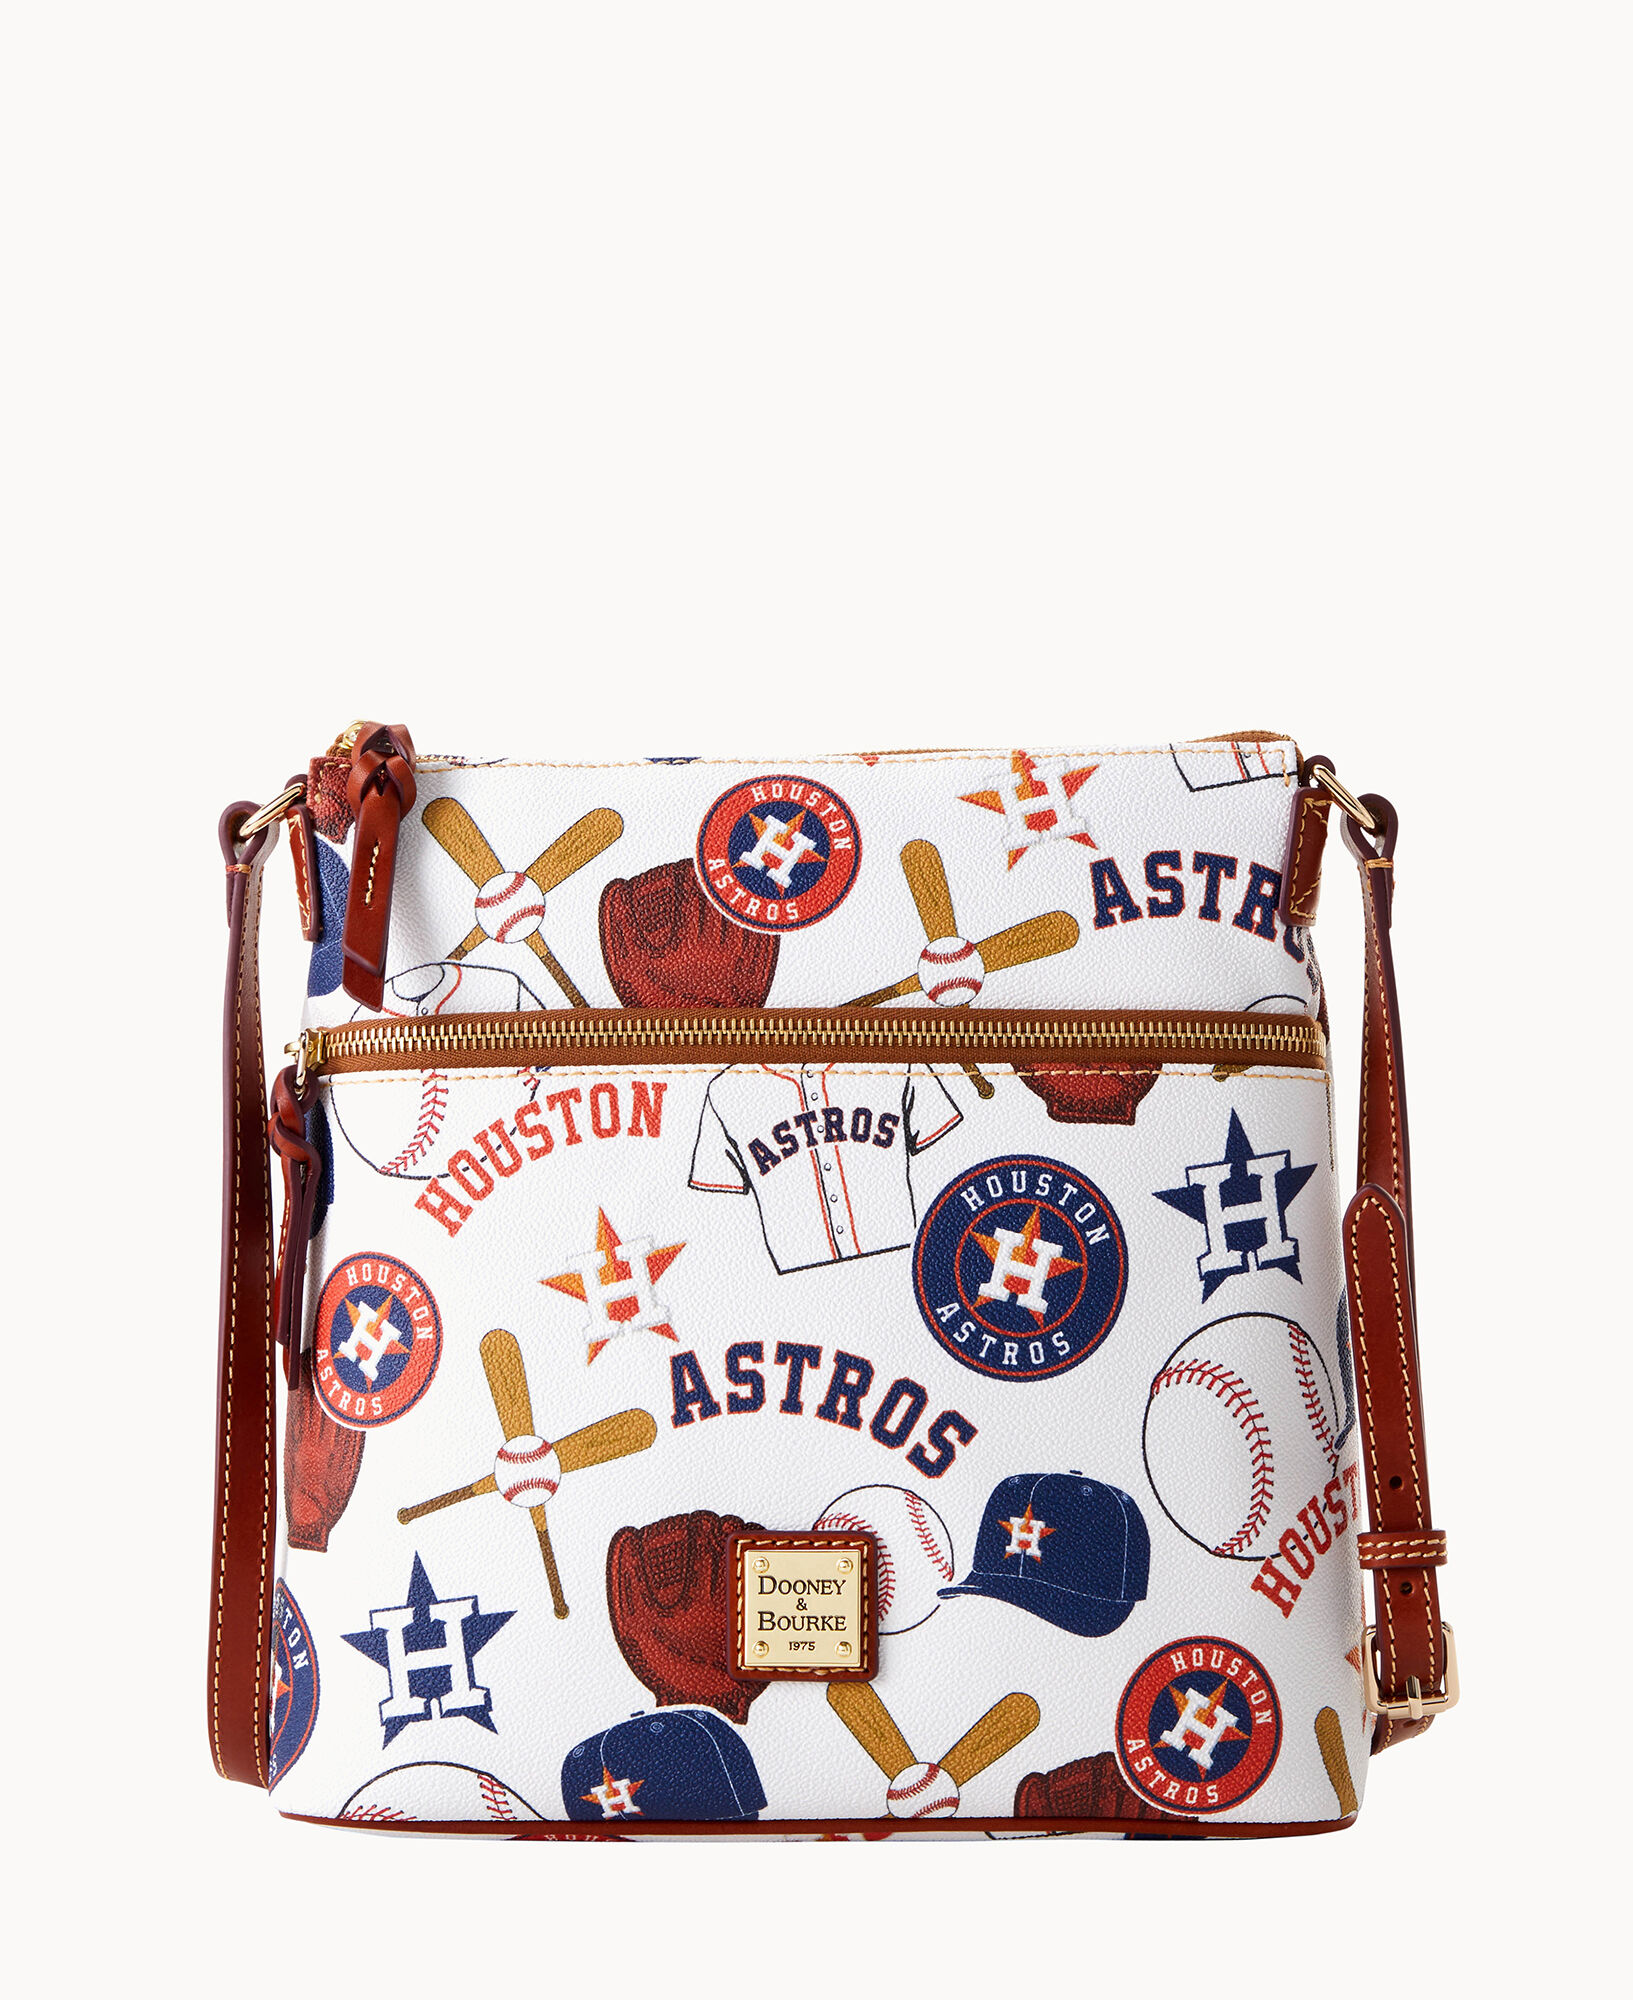 Dooney & Bourke Houston Astros Signature Large Zip Tote Bag